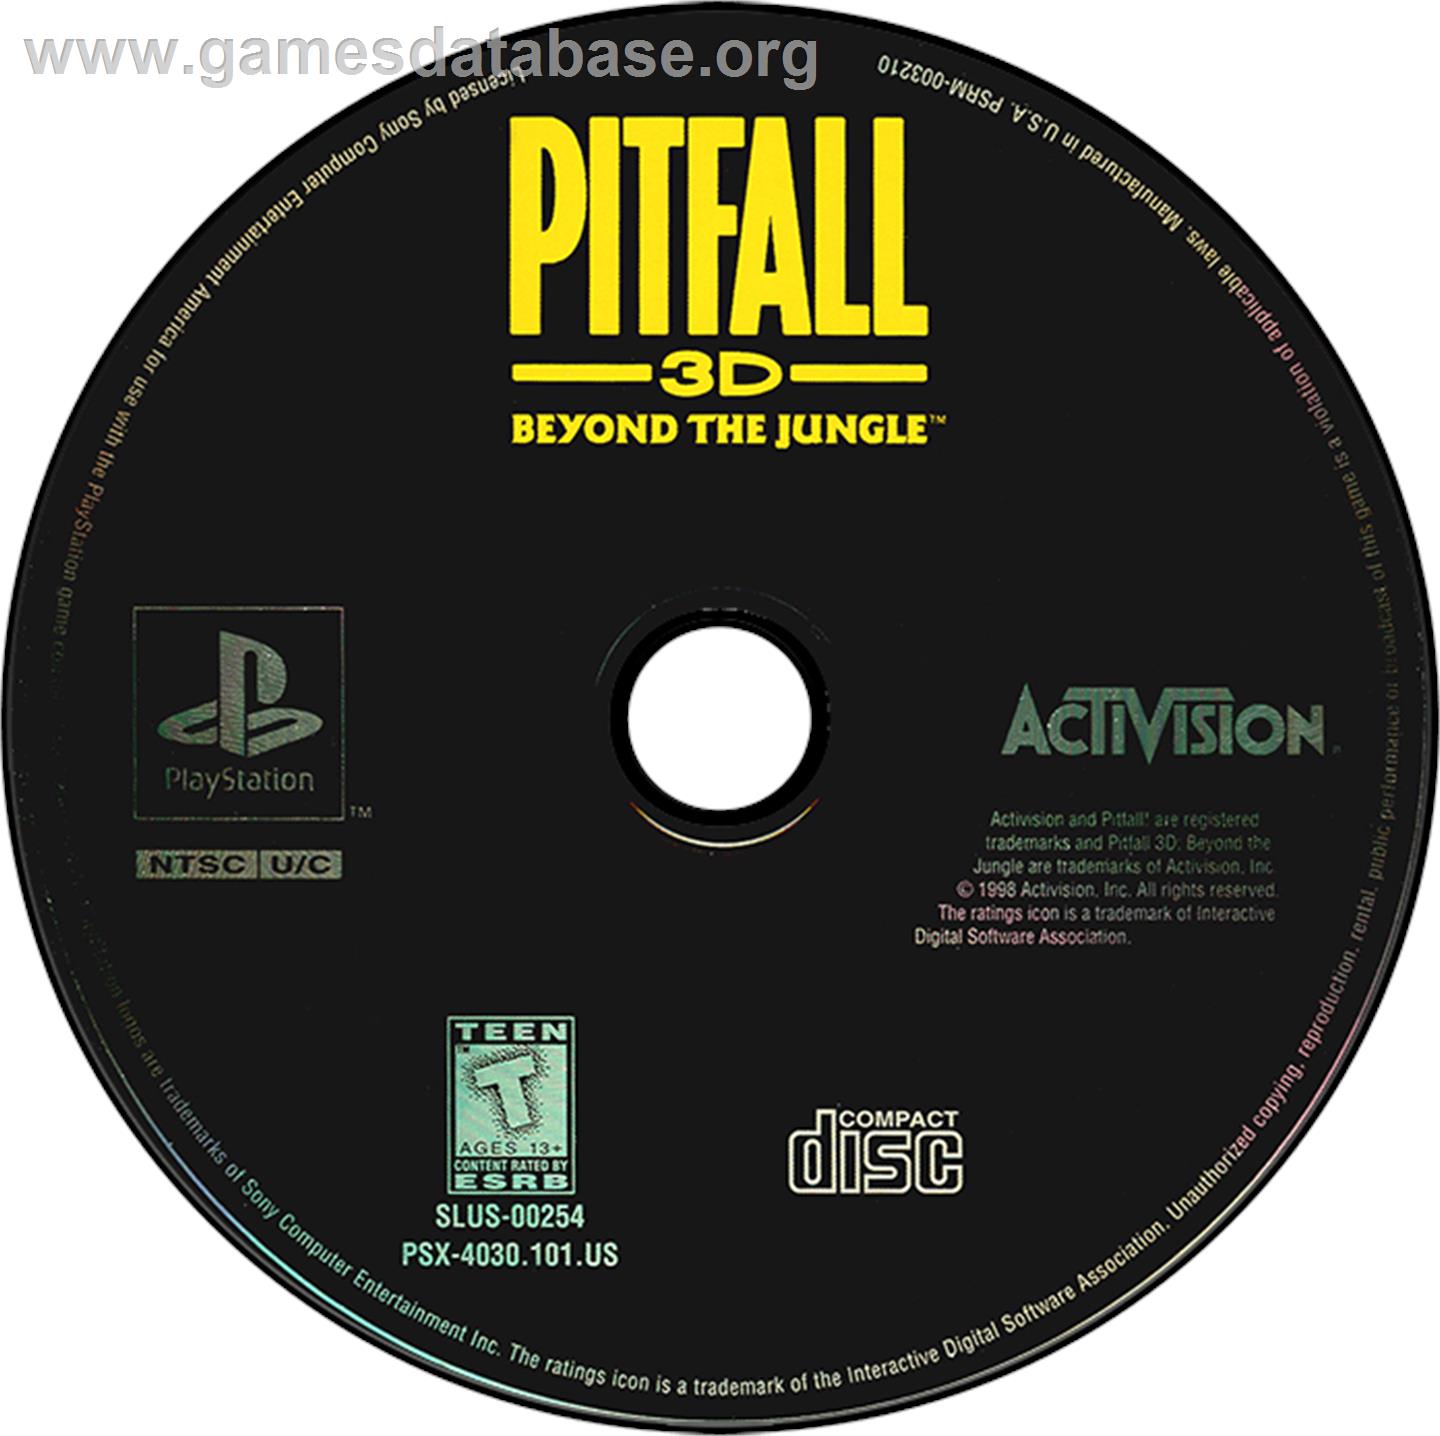 Pitfall 3D: Beyond the Jungle - Sony Playstation - Artwork - Disc